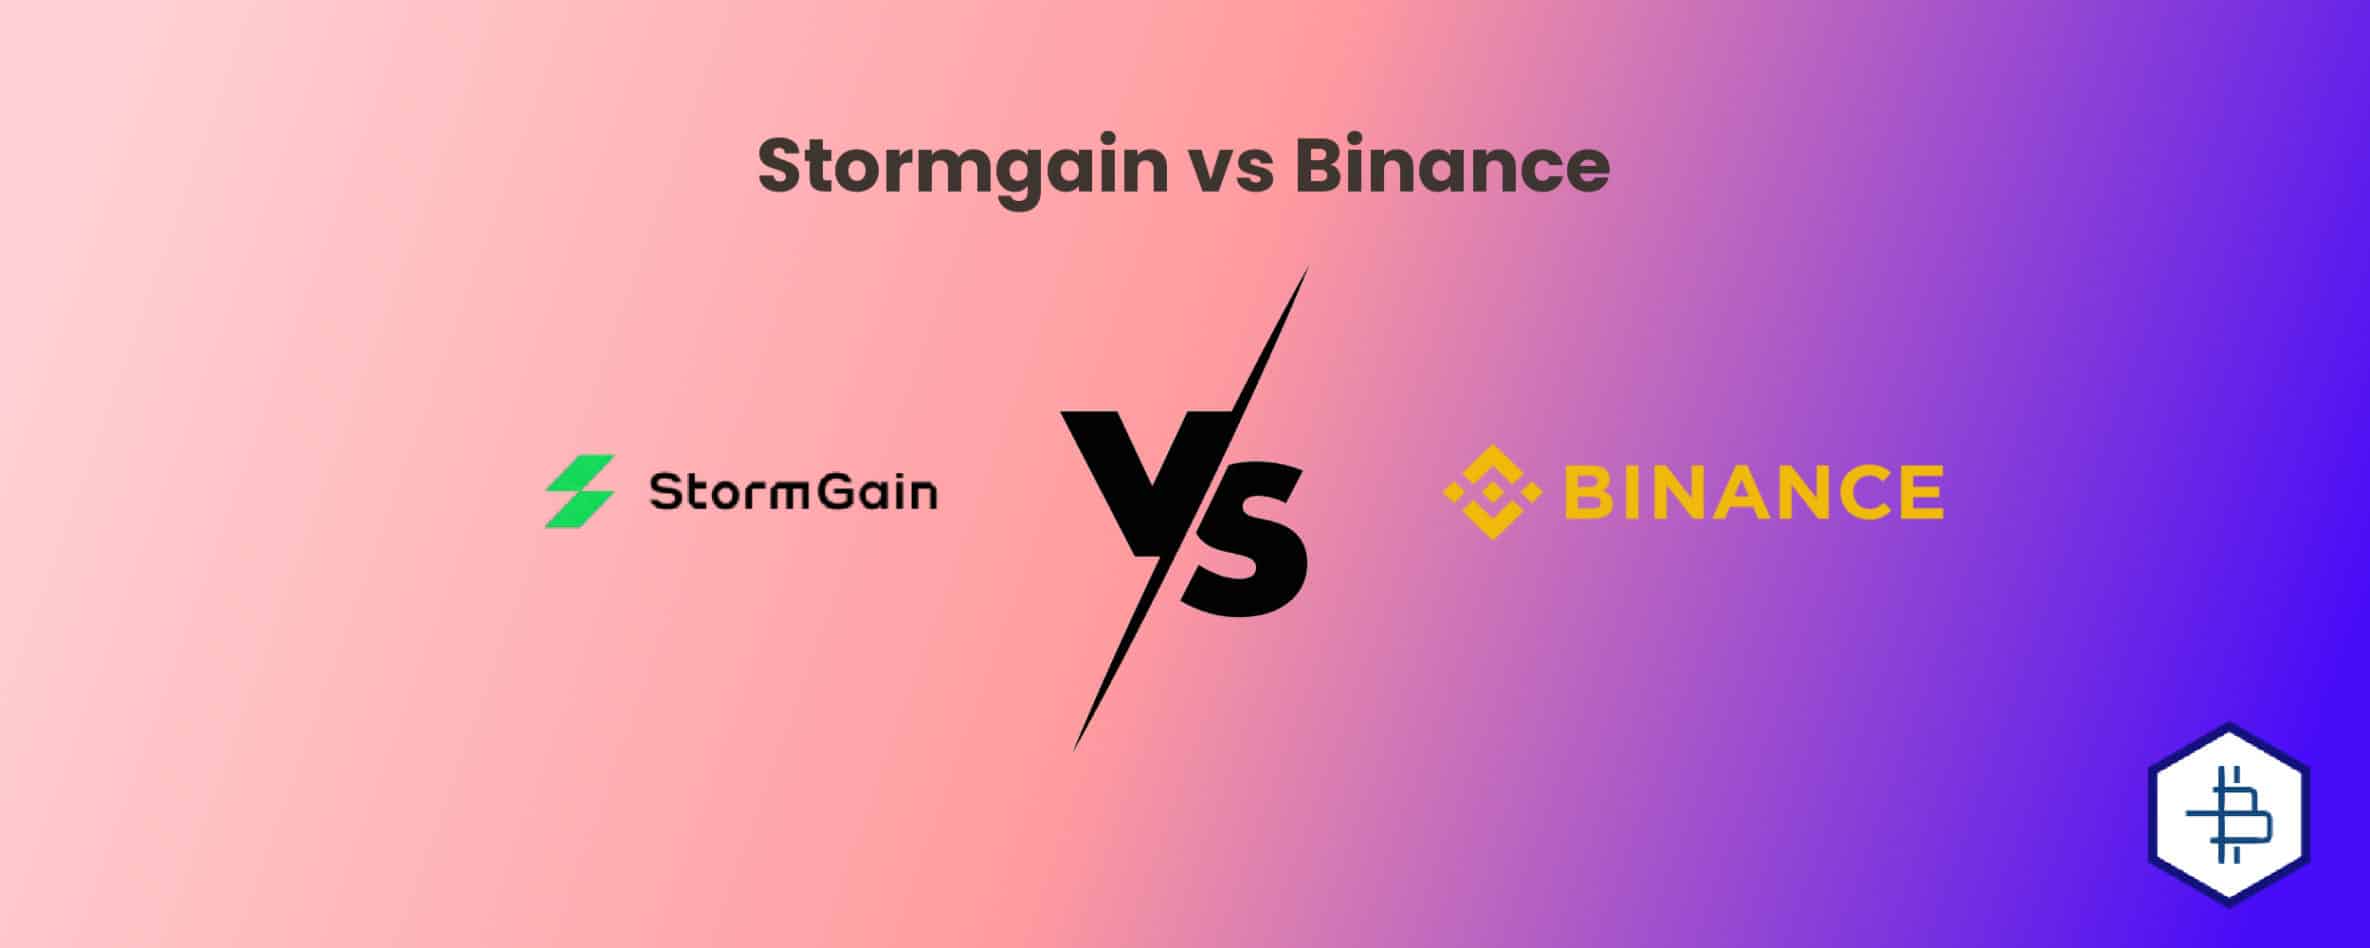 Stormgain vs Binance